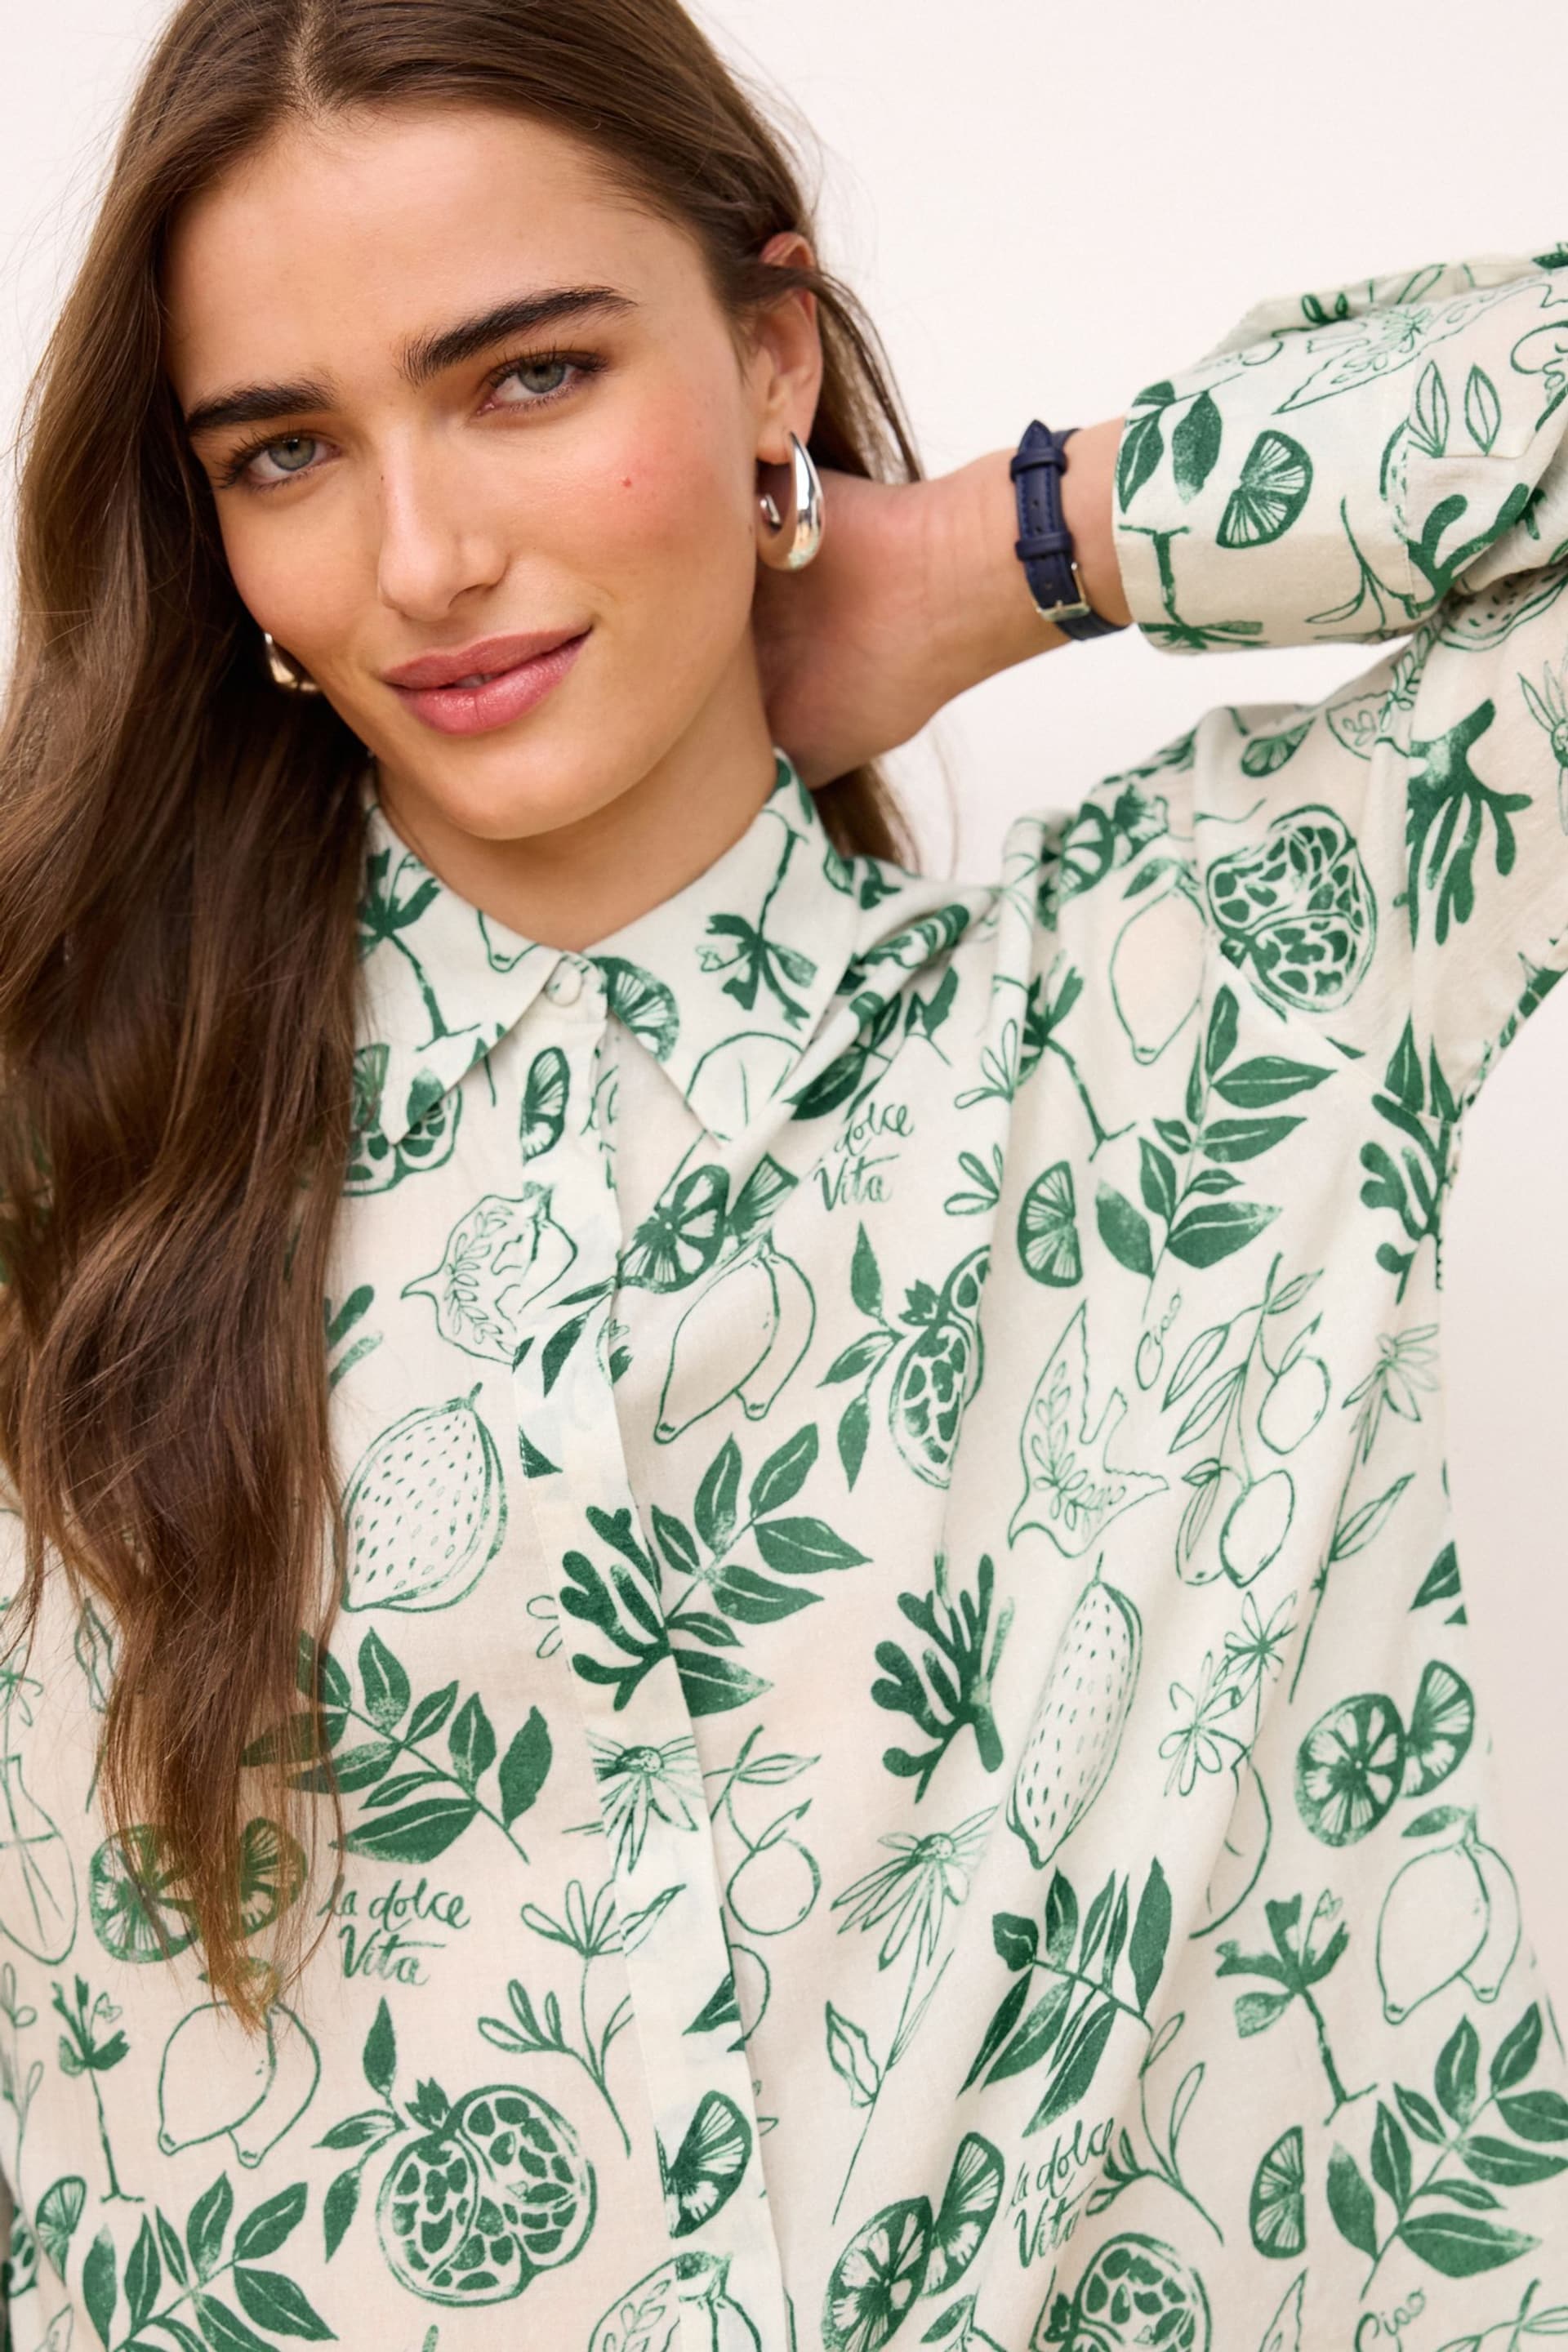 Ecru White/Green Print Long Sleeve Shirt - Image 4 of 6